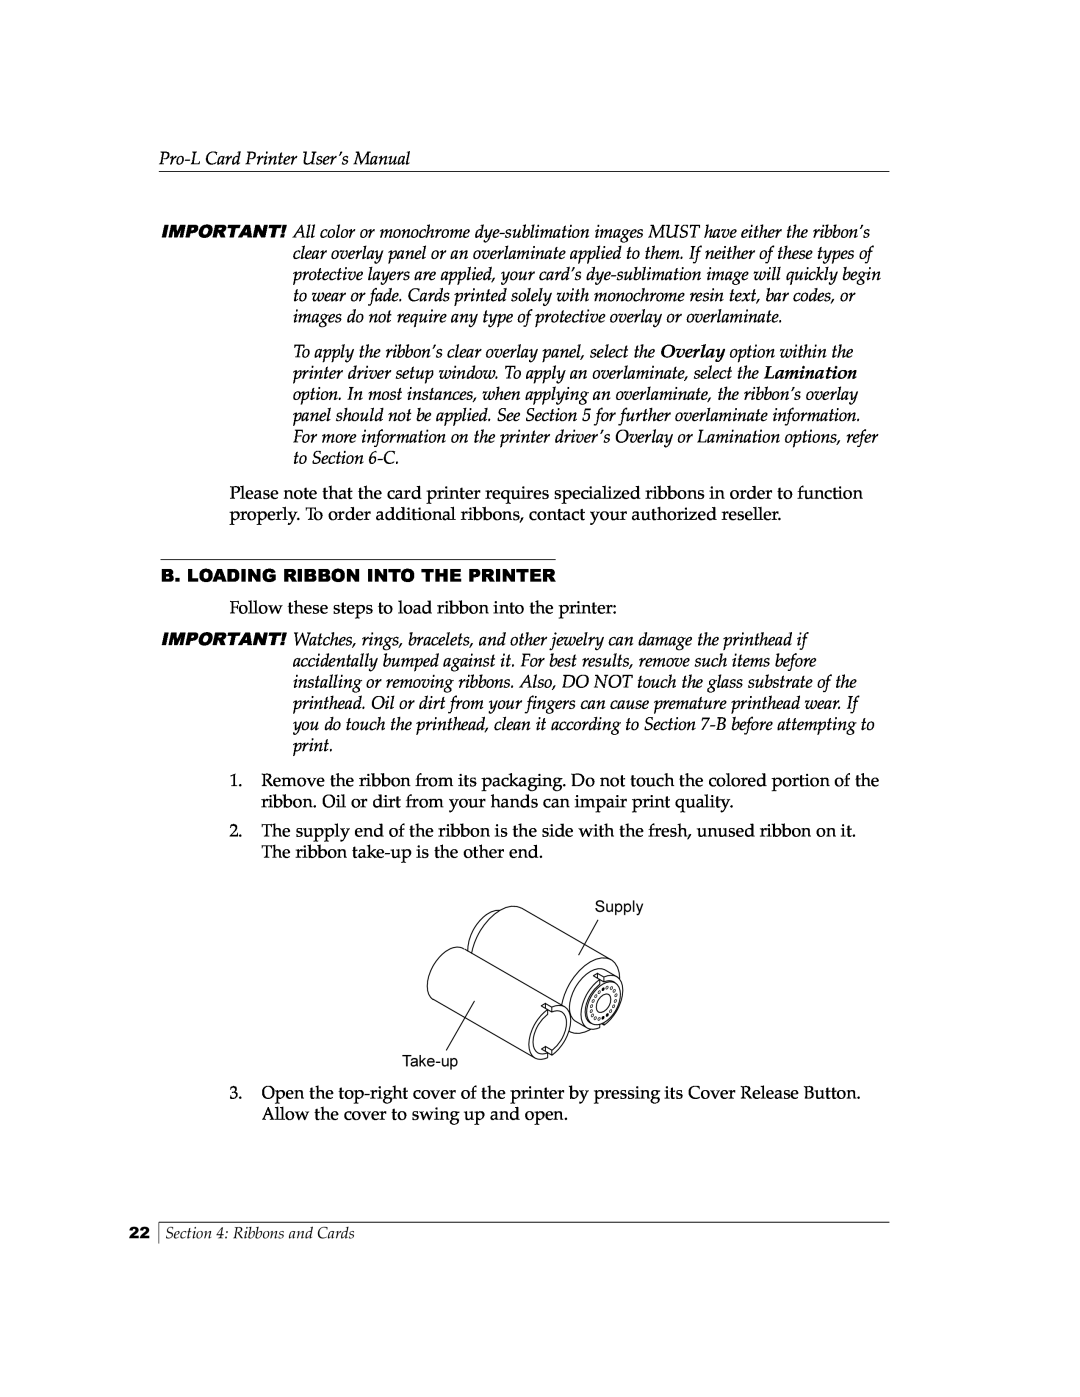 FARGO electronic Pro-L manual B. Loading Ribbon Into The Printer 